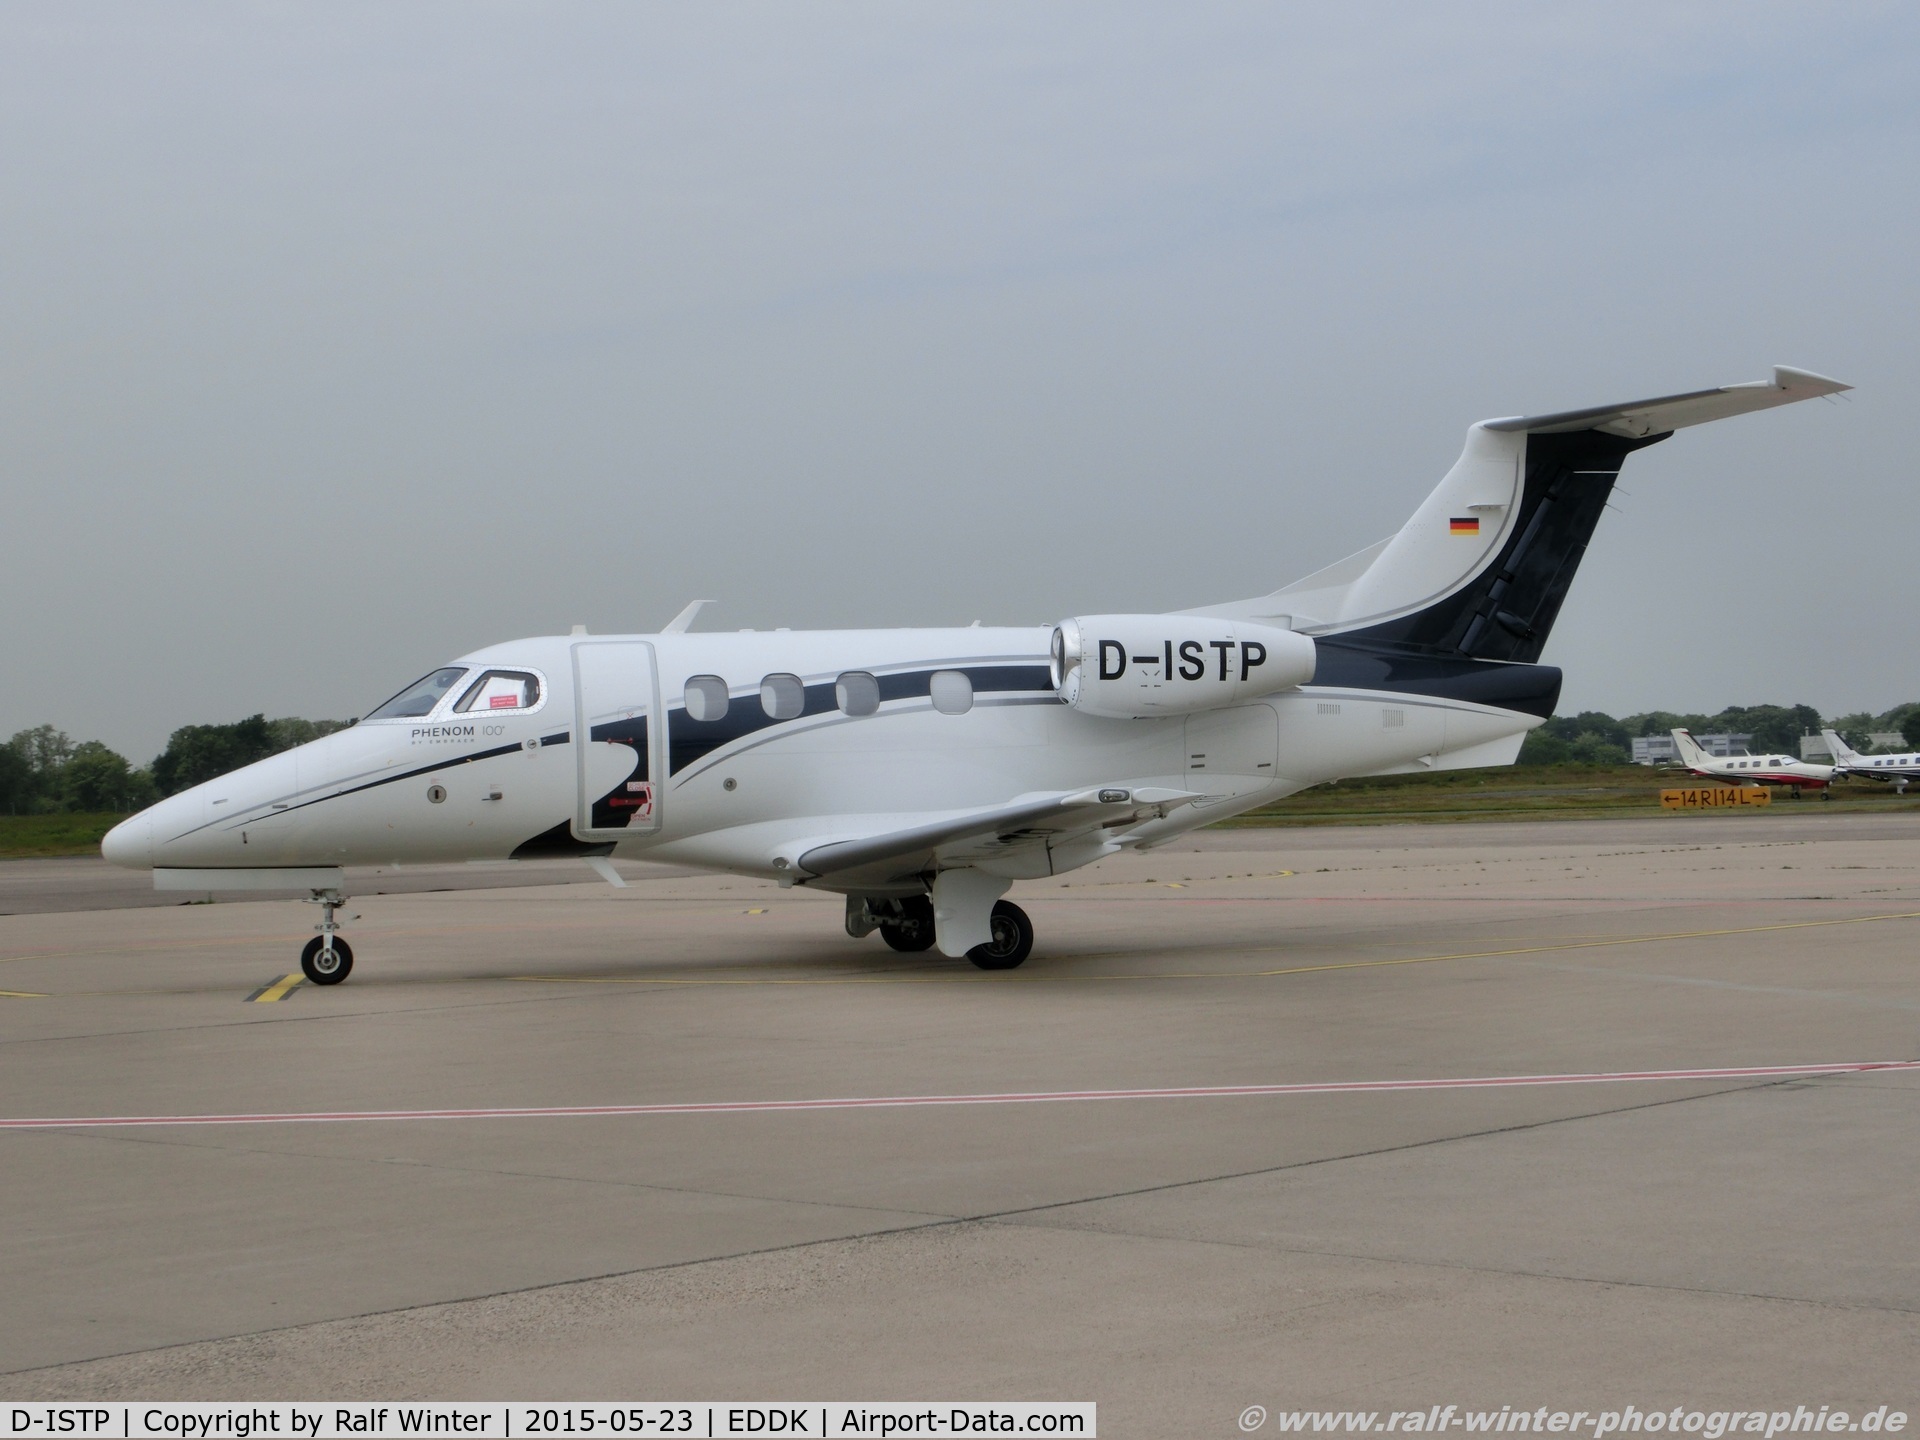 D-ISTP, 2010 Embraer EMB-500 Phenom 100 C/N 50000147, Embraer EMB-500 Phenom 100 - MHV MHS Aviation - 50000147 - D-ISTP - 23.05.2015 - CGN